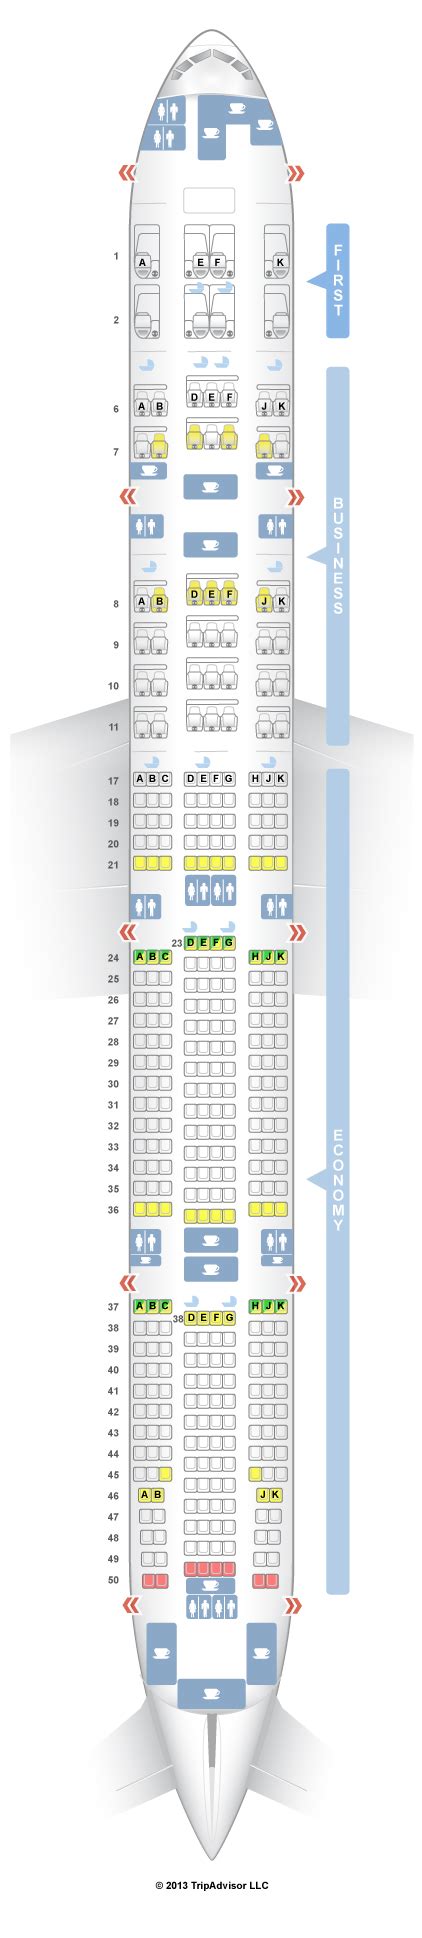 Boeing Er Seating Chart